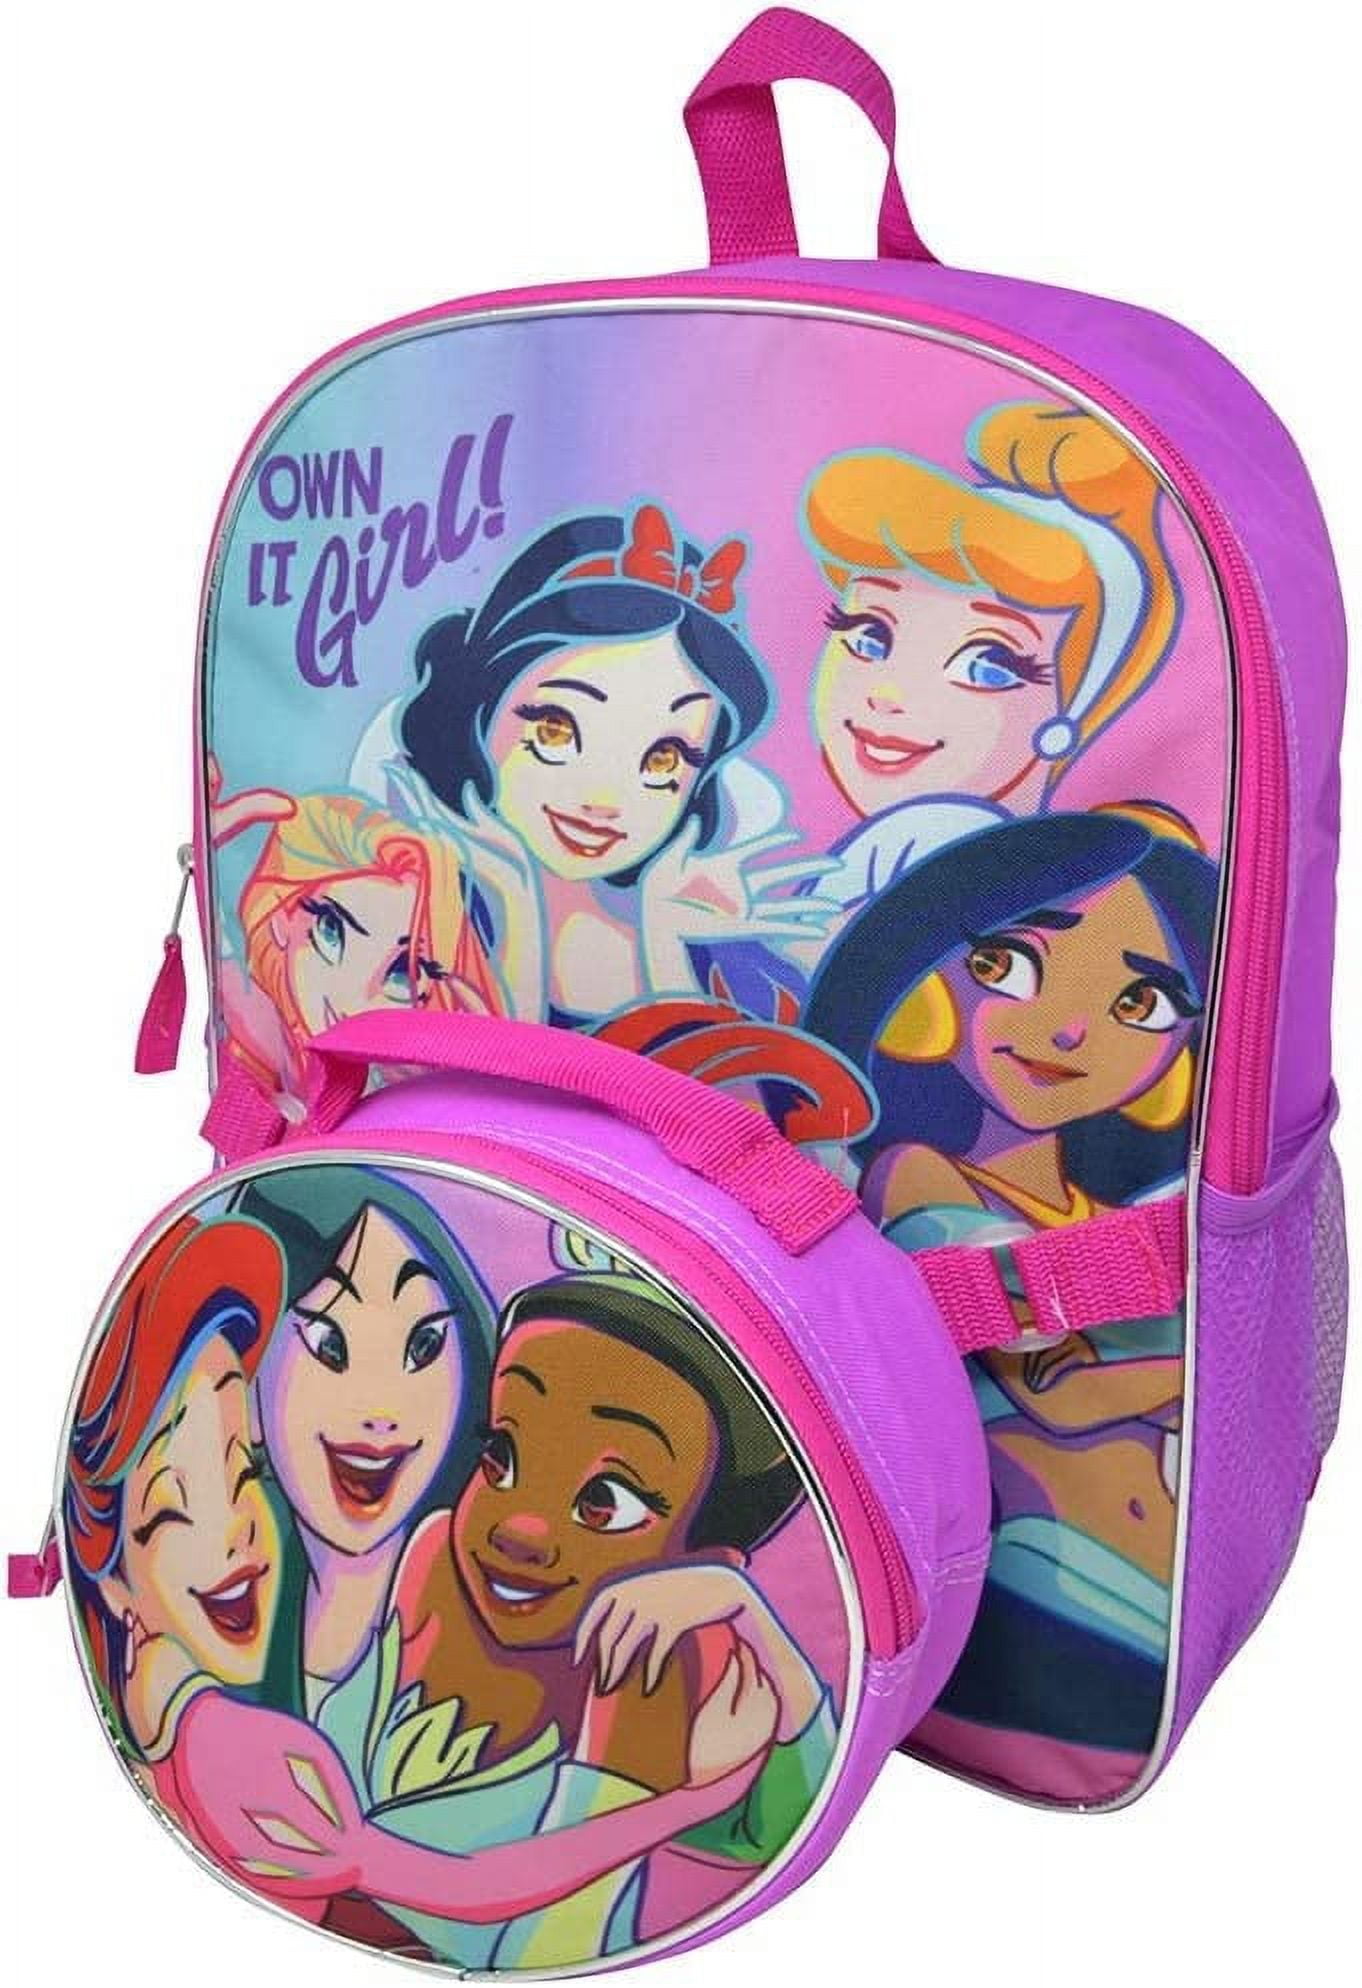 Fast Forward Disney Princess Backpack and Lunch Box Set - Bundle with 16  Princess Backpack, Disney Princess Lunch Bag, Water Bottle, Princess